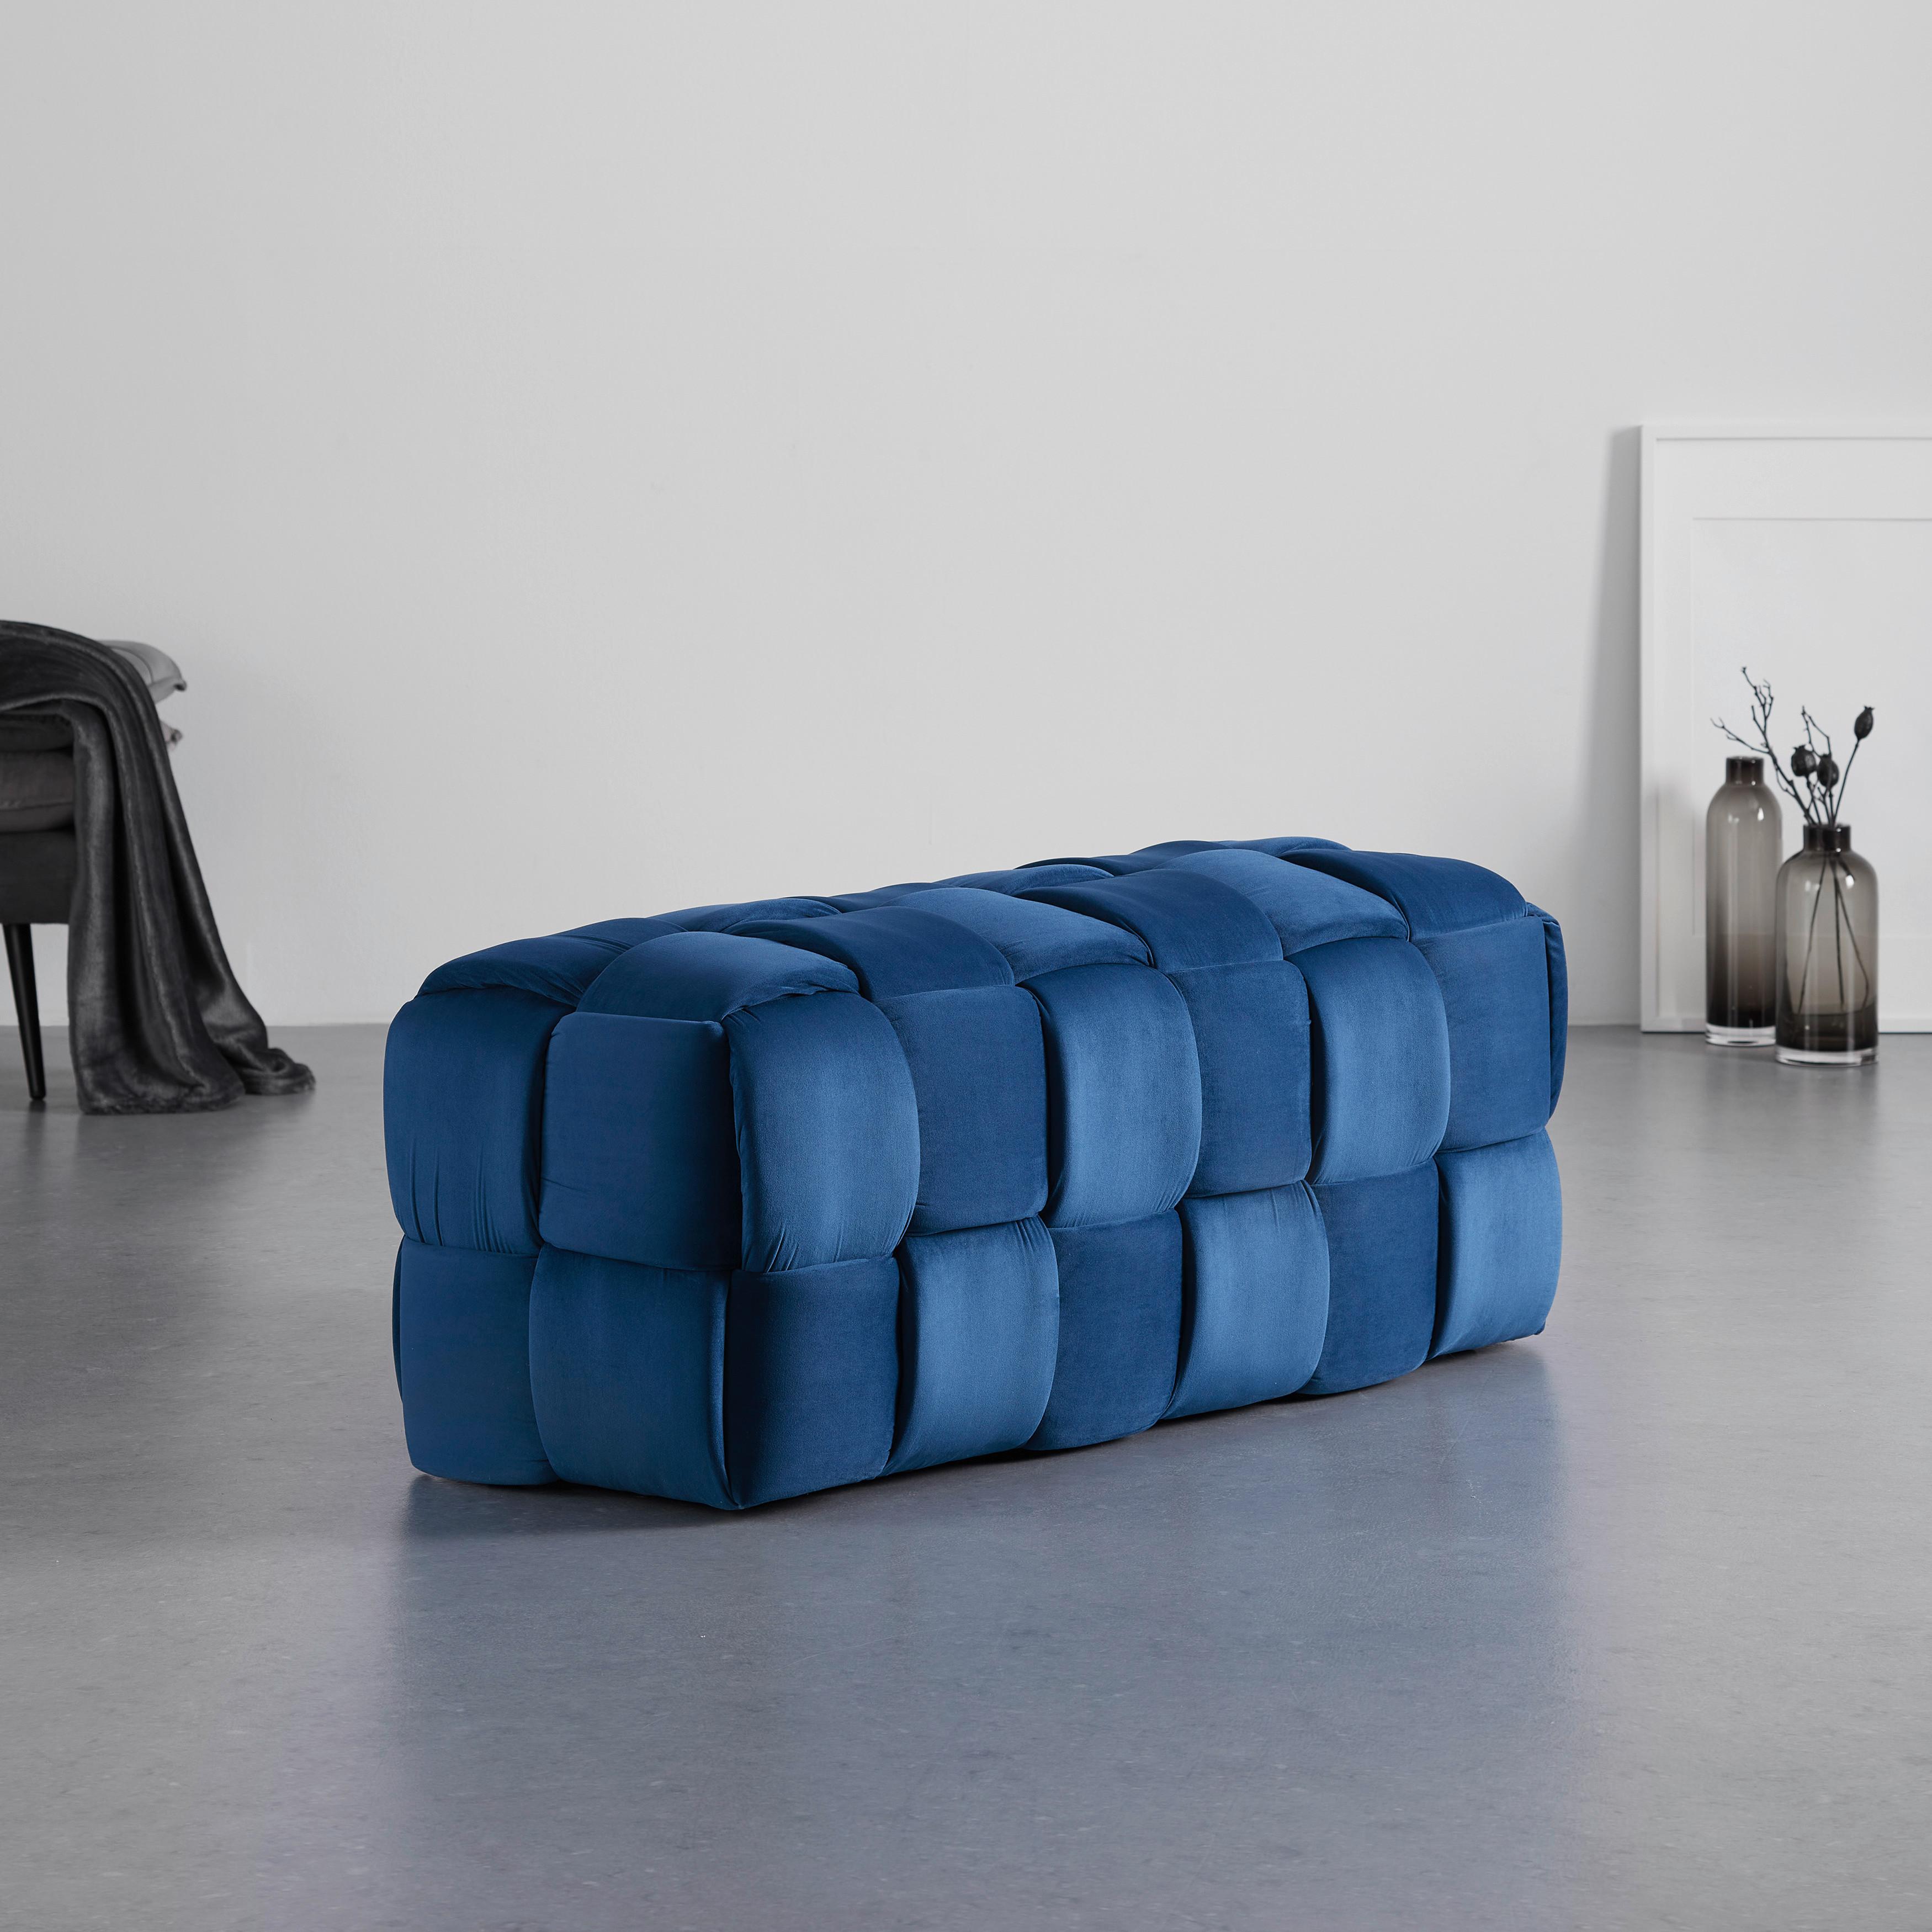 Sitzbank blau, "Ella", Samt - Blau/Schwarz, MODERN, Holz/Kunststoff (118/47/47cm) - Bessagi Home